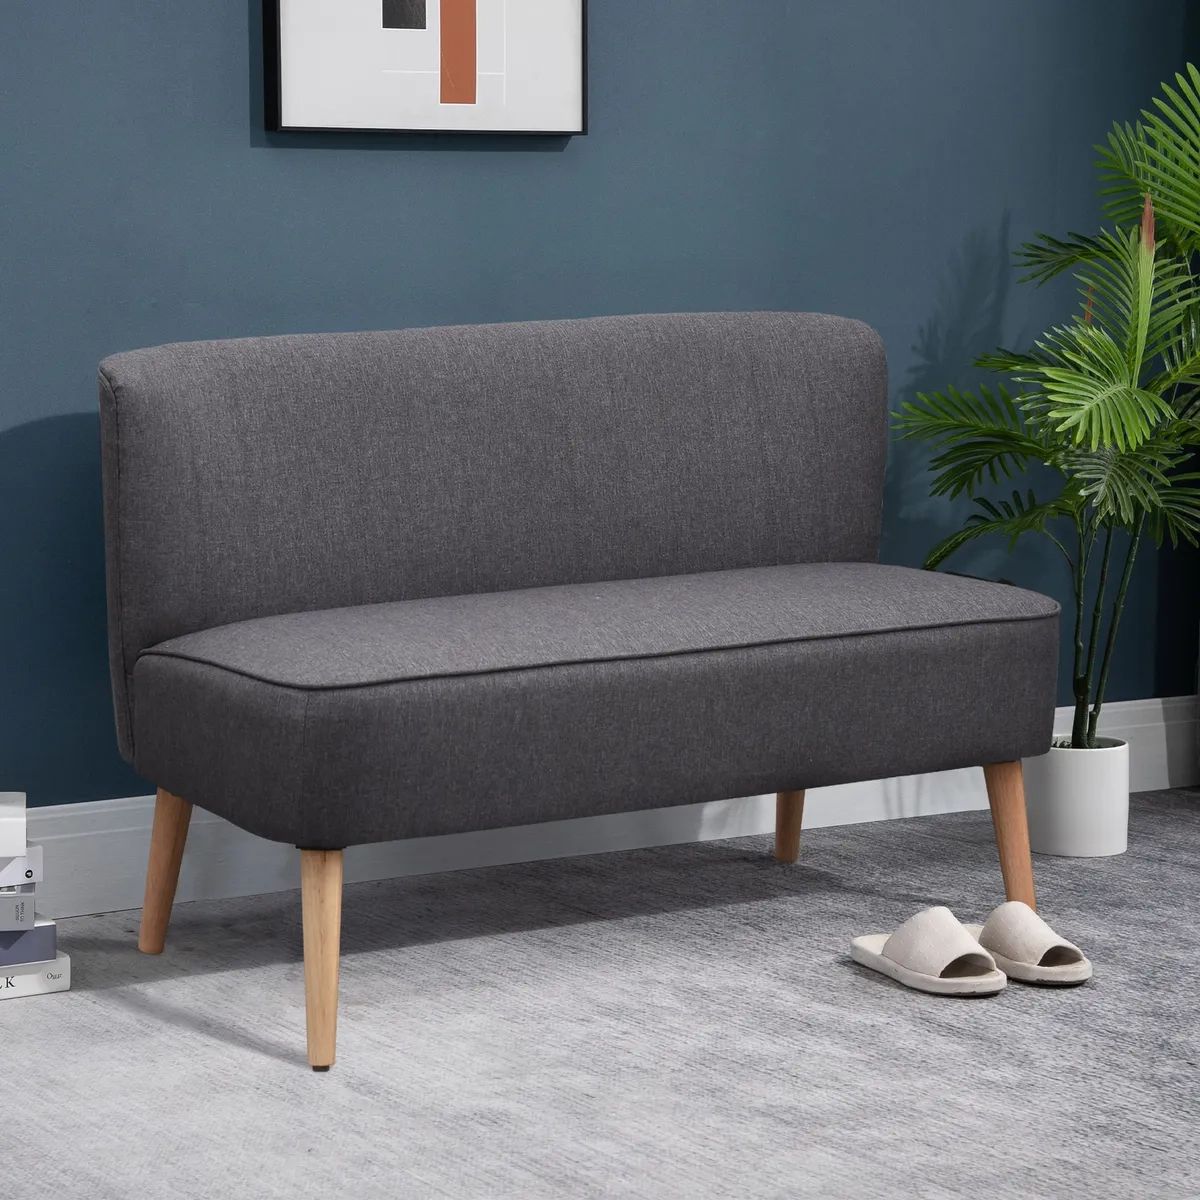 Modern Double Seat Sofa Loveseat Couch Padded Linen Wood Legs, Dark Grey |  Ebay Throughout Dark Grey Loveseat Sofas (View 12 of 15)